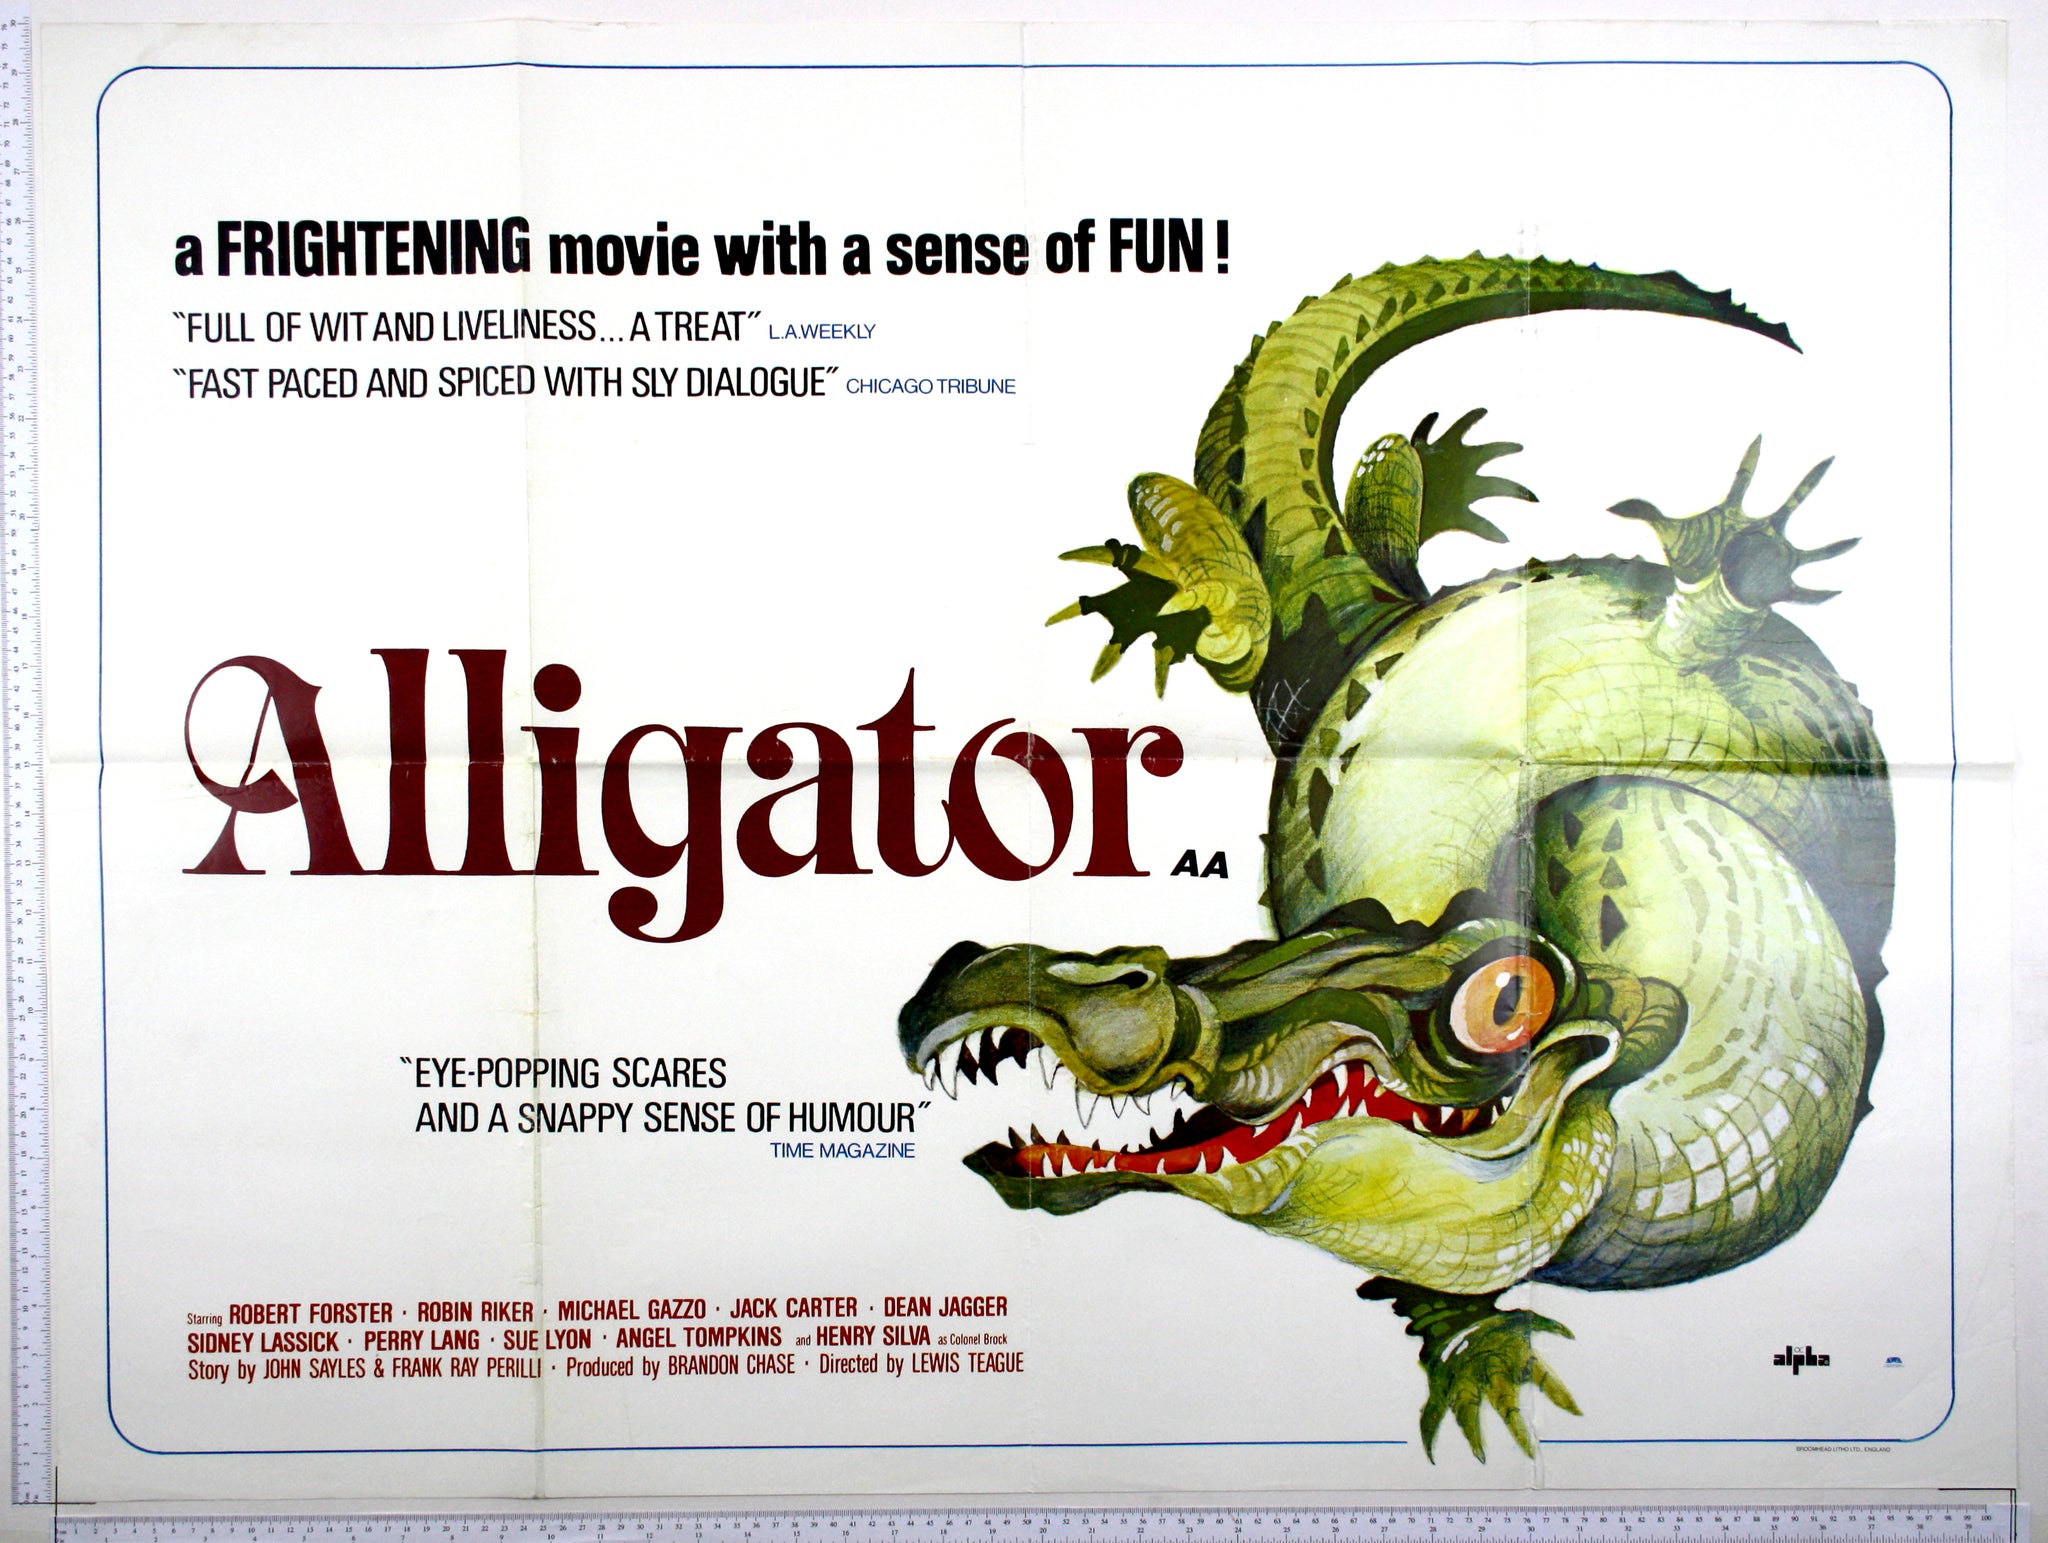 Green alligator on white in comedic cartoon-like style